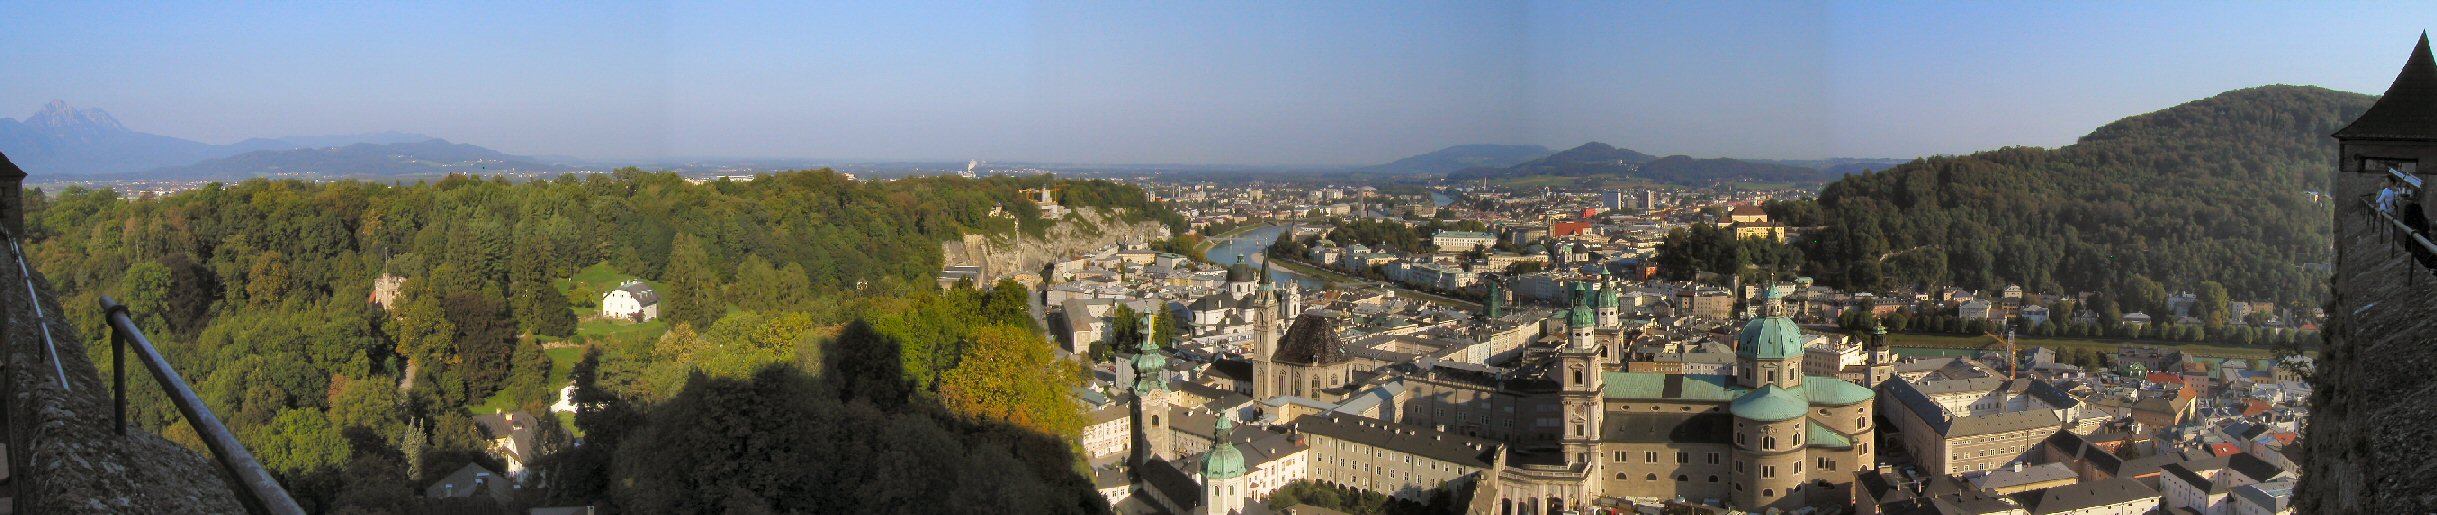 Salzburg Panorama from Hohensalzburg Fortress